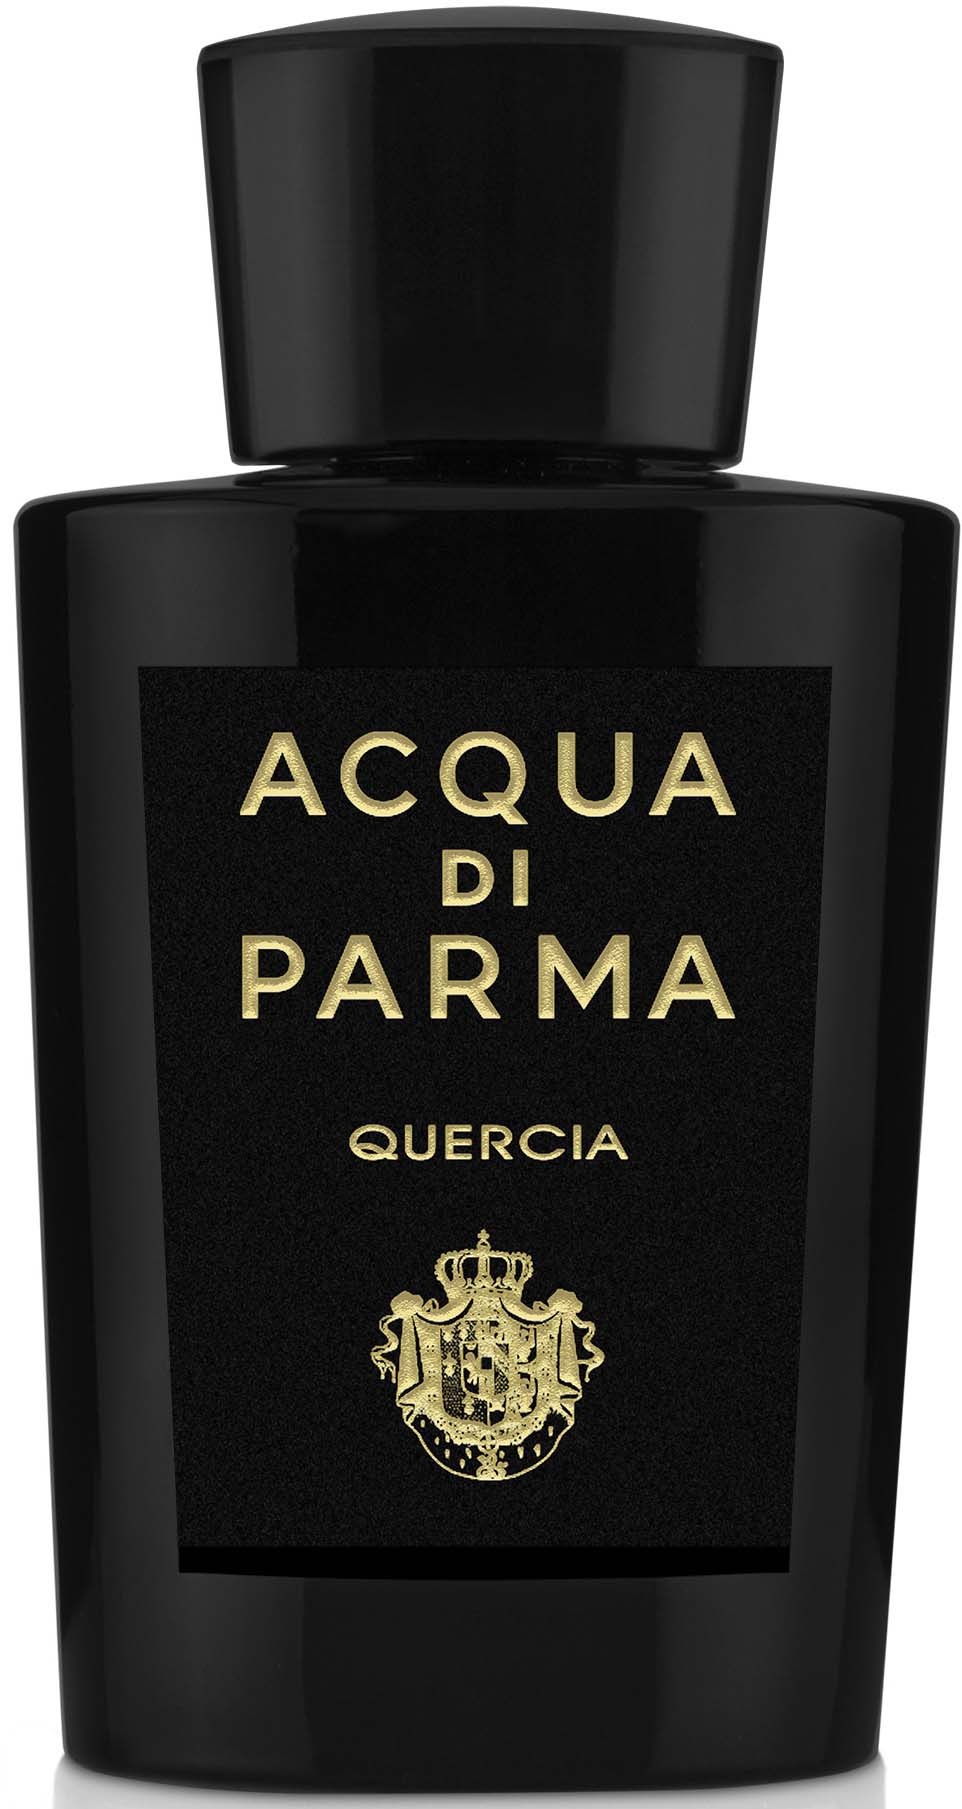 Acqua Di Parma Quercia woda perfumowana unisex 180 ml